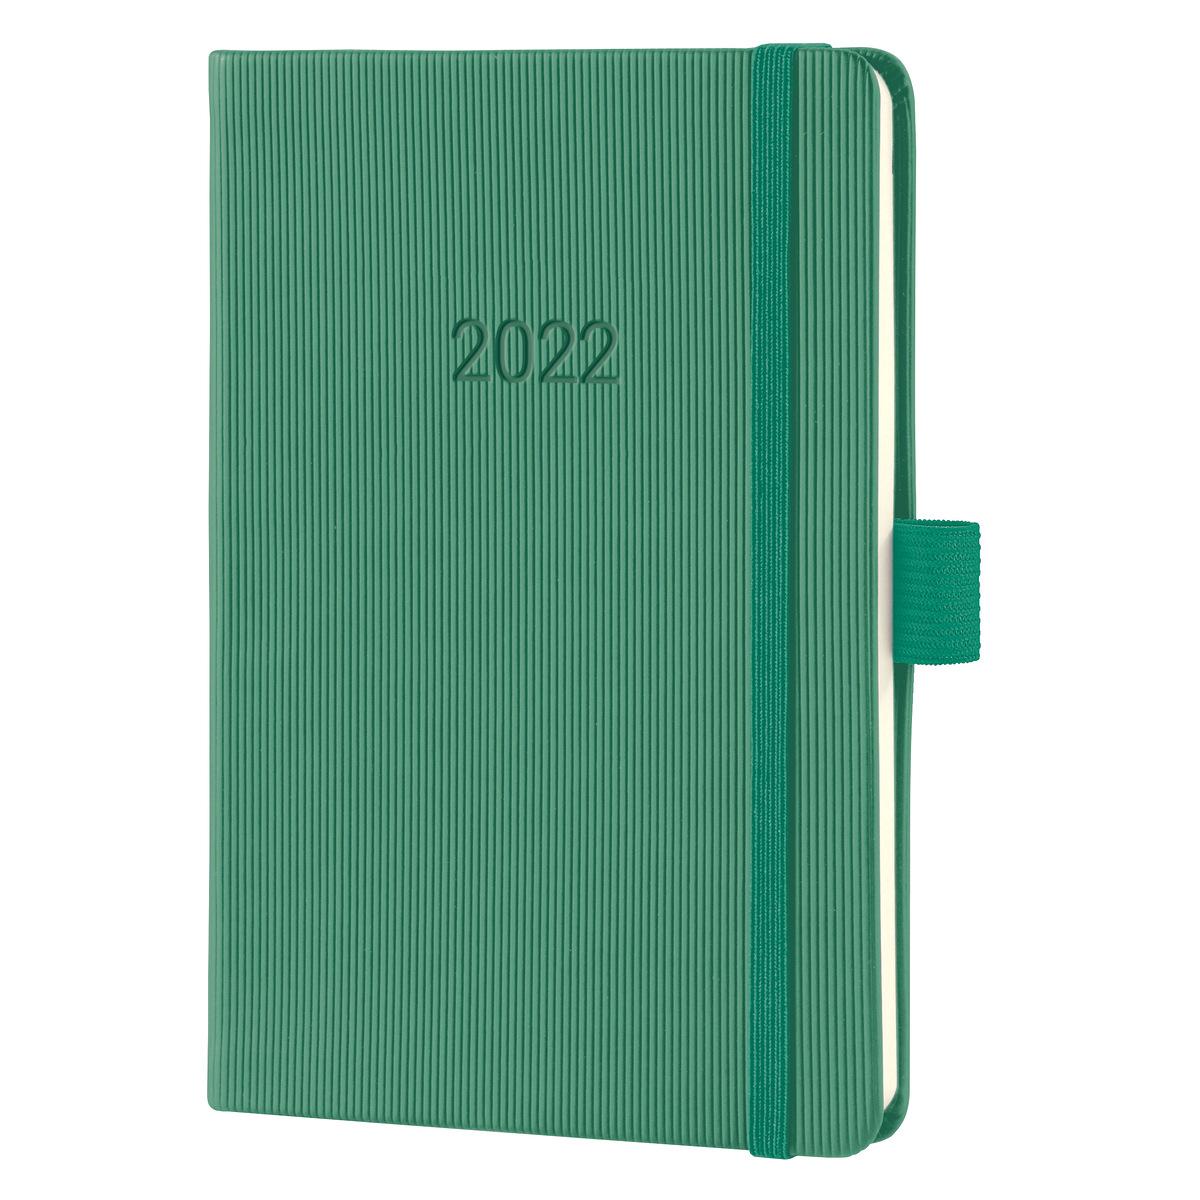 C2271-Kalender-2022-CONCEPTUM-hardcover